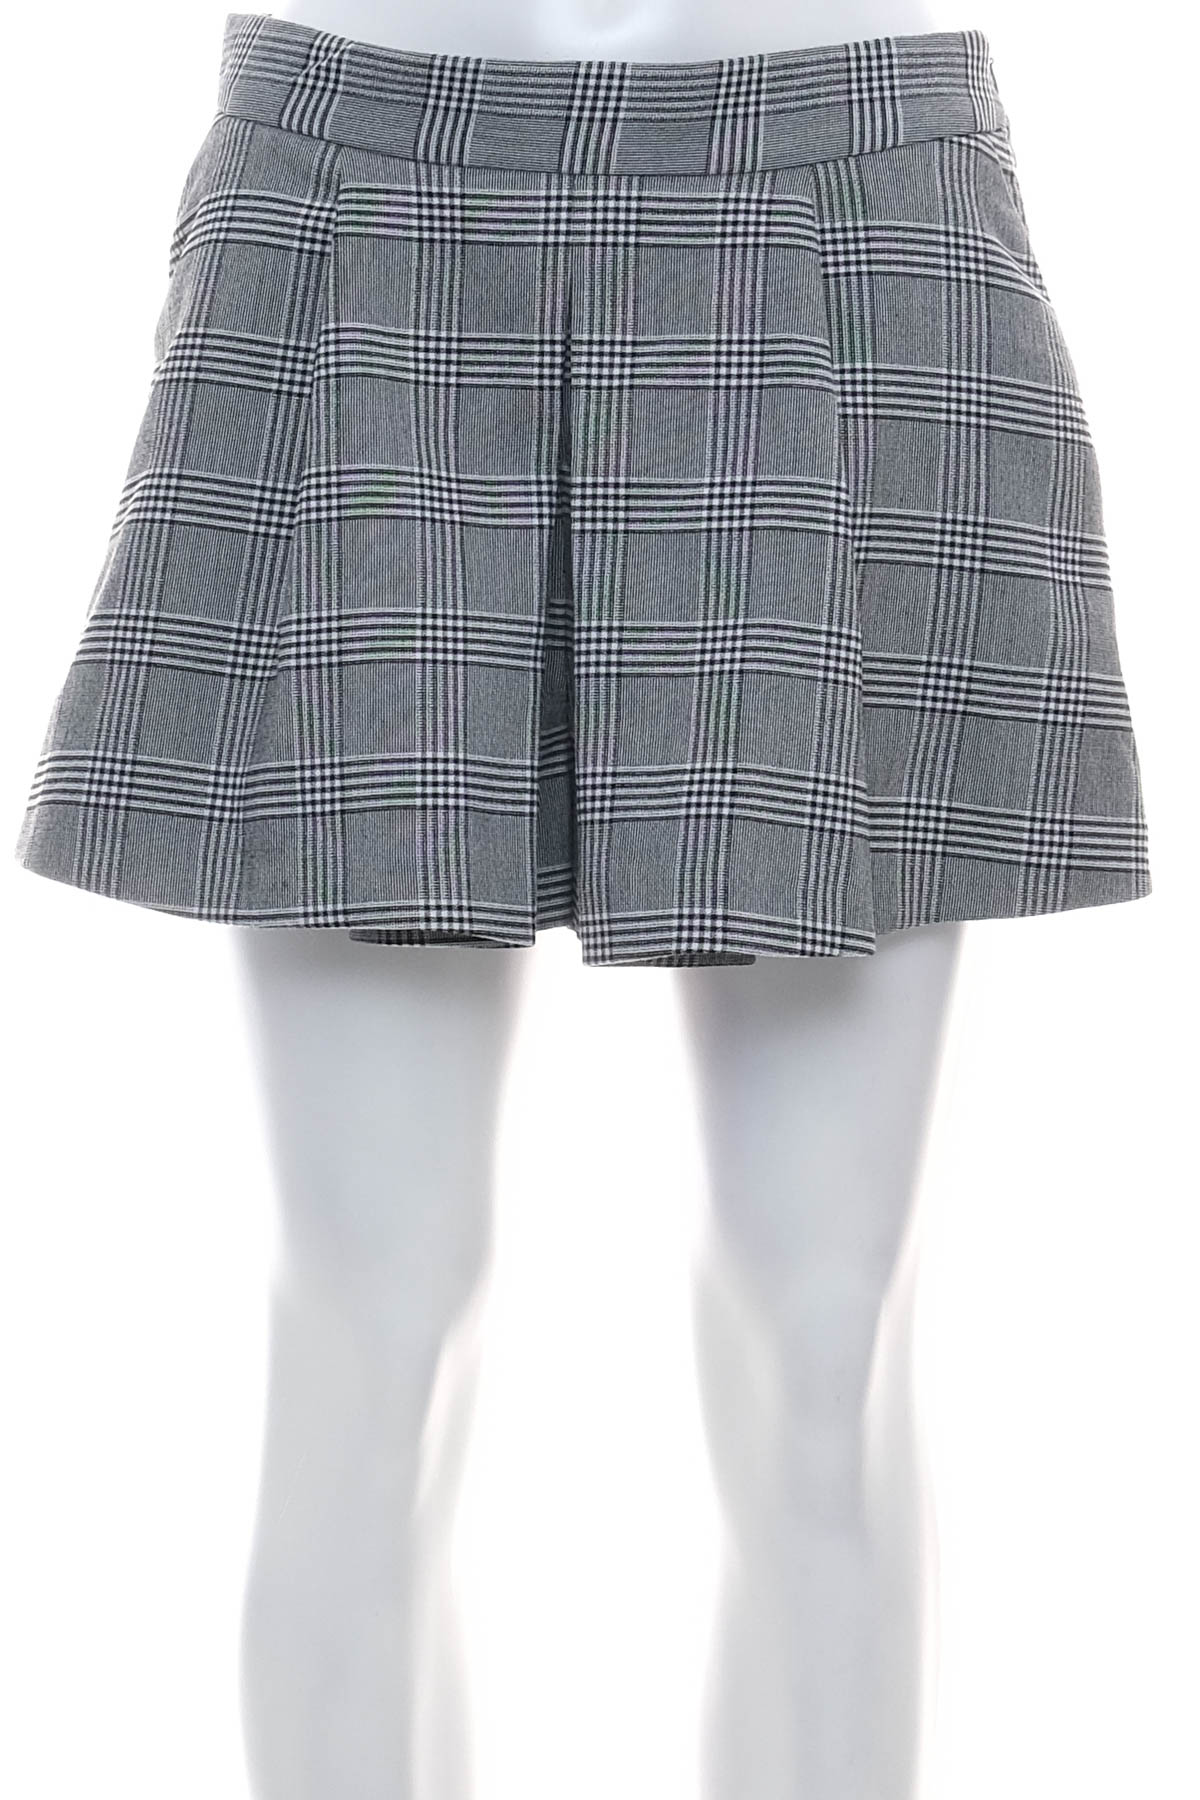 Female shorts - ZARA Woman - 0